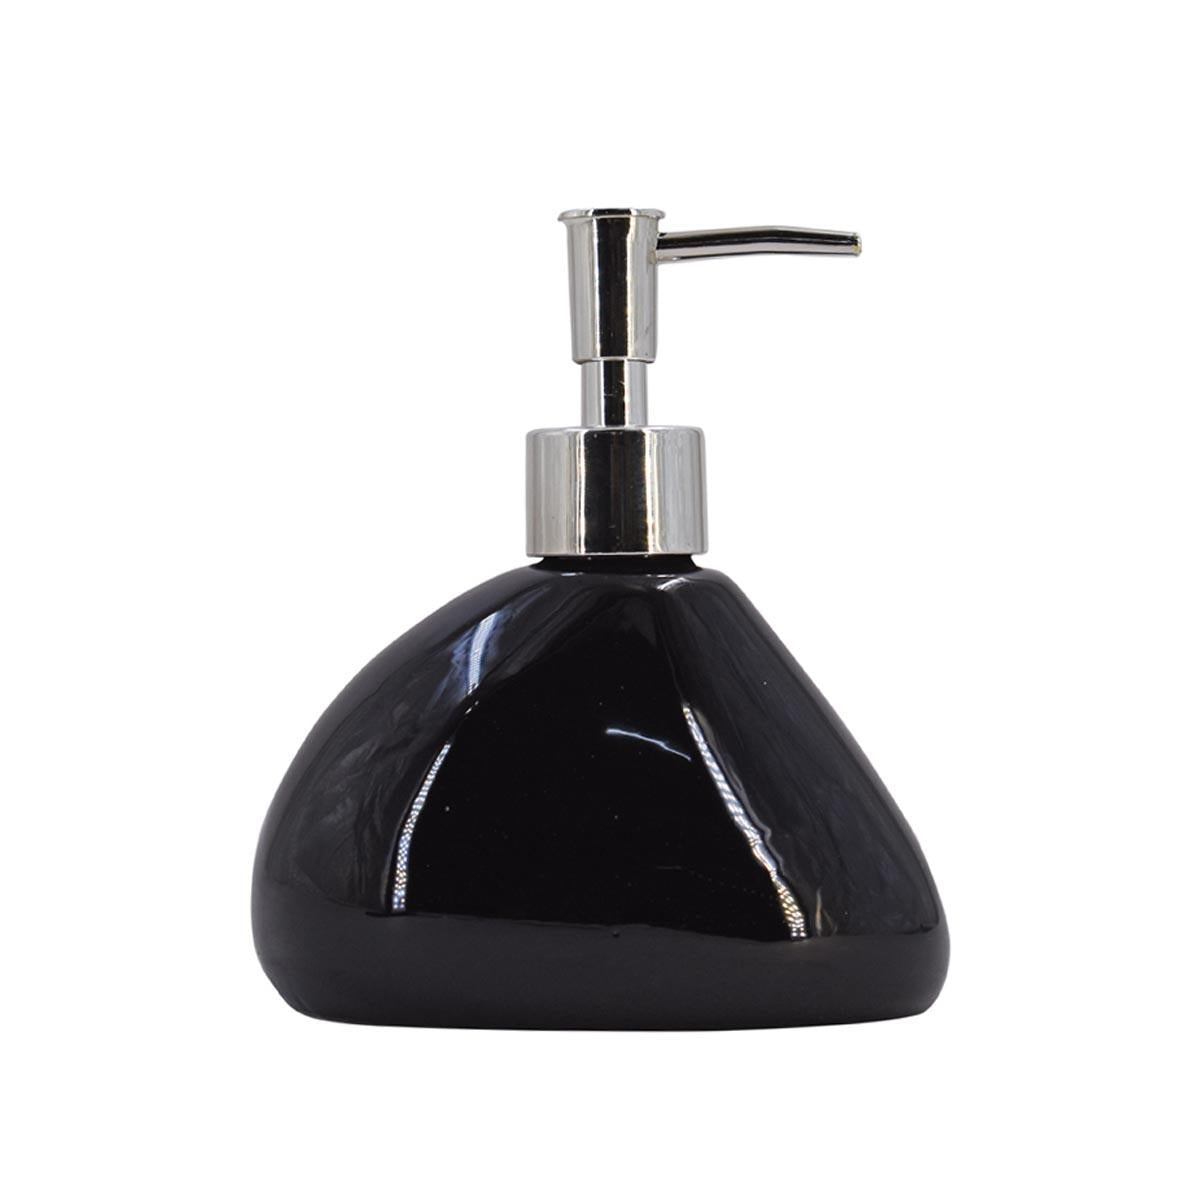 Ceramic Soap Dispenser handwash Pump for Bathroom, Set of 1, Red (7973)